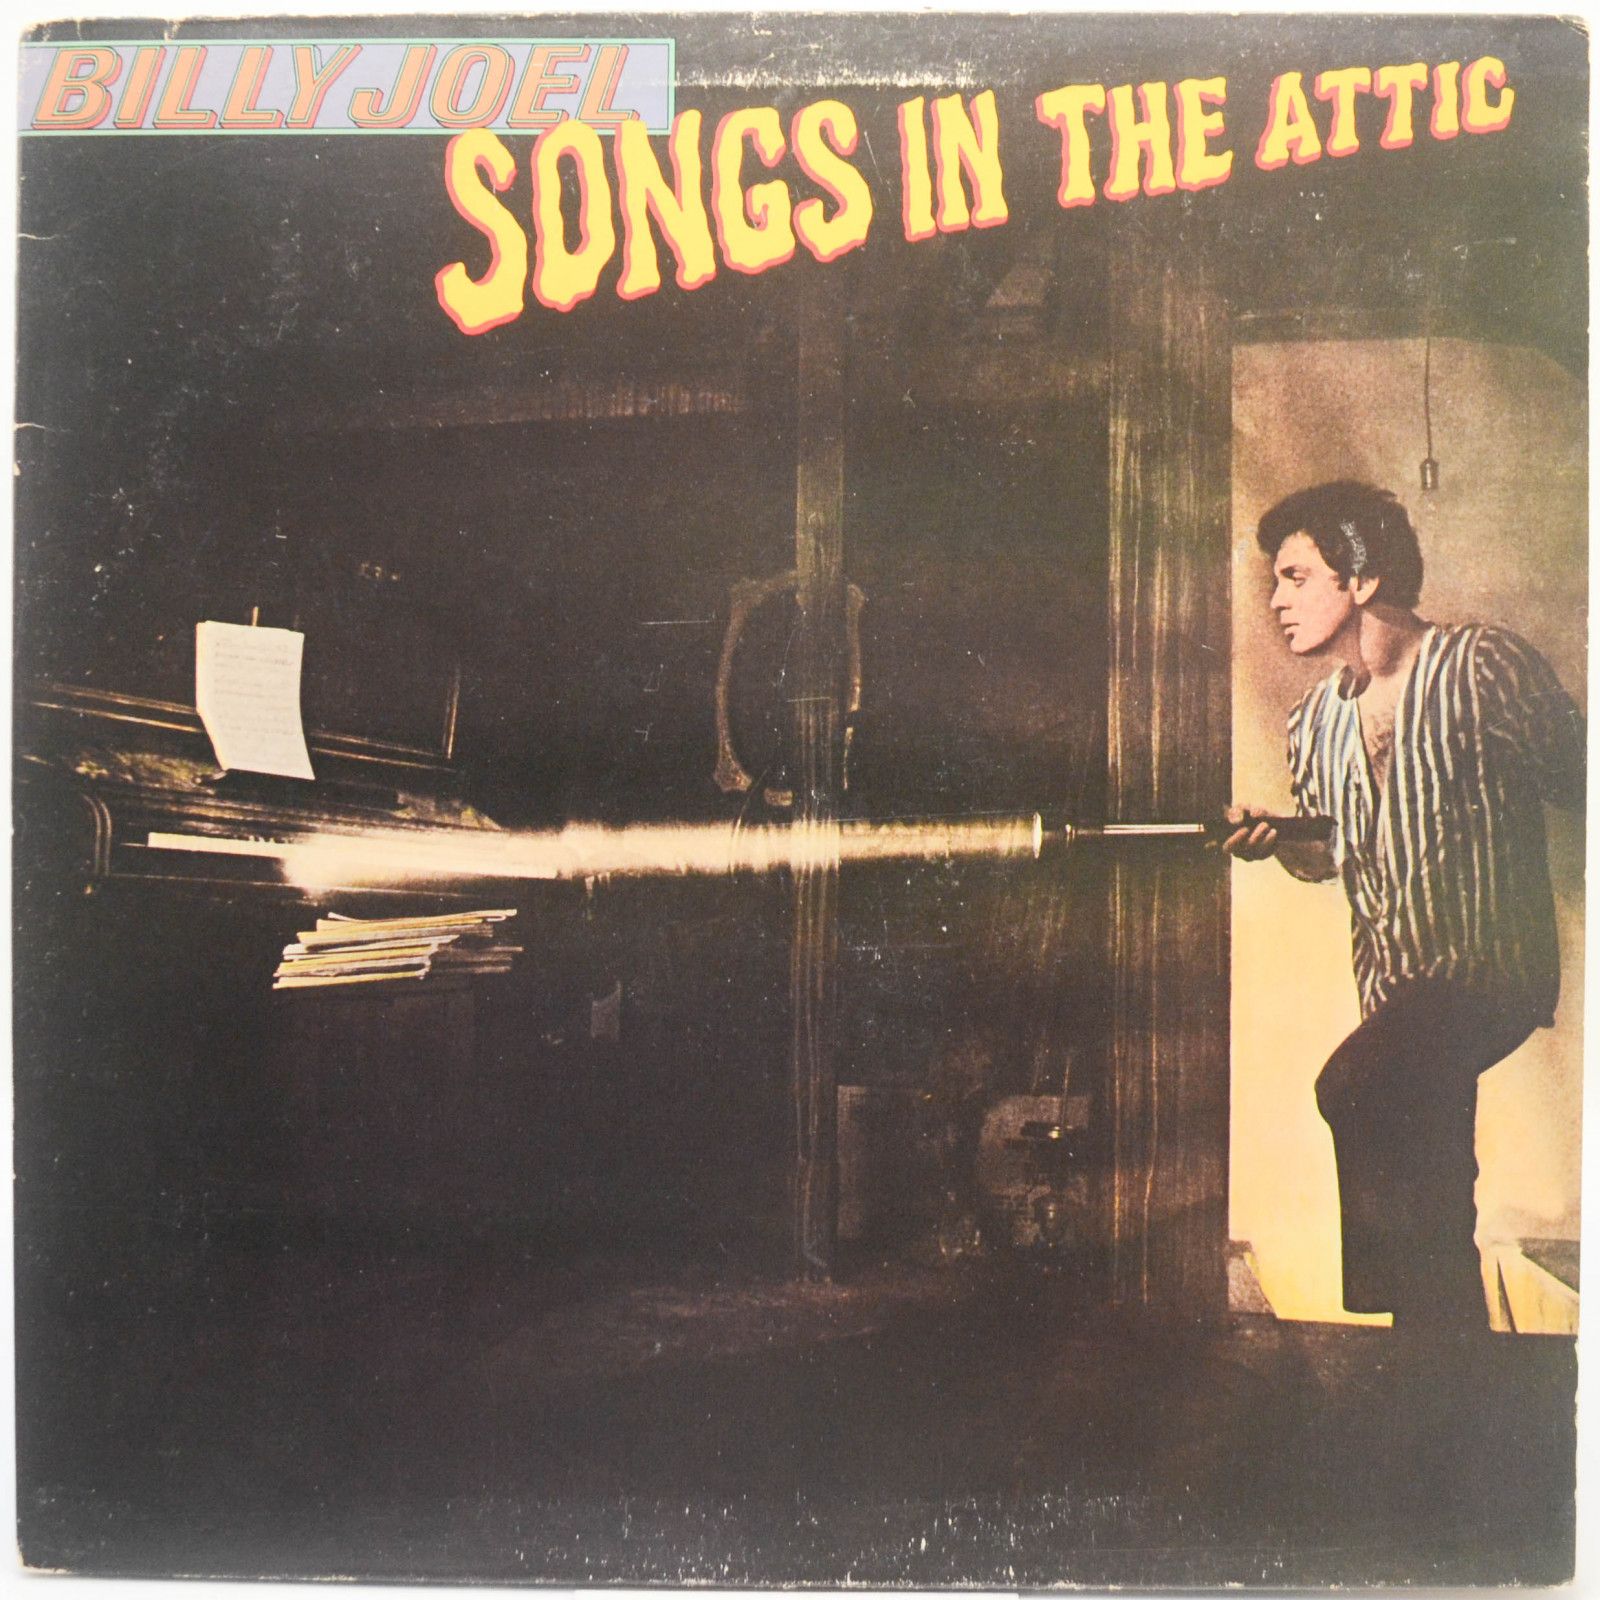 Billy Joel — Songs In The Attic (USA), 1981